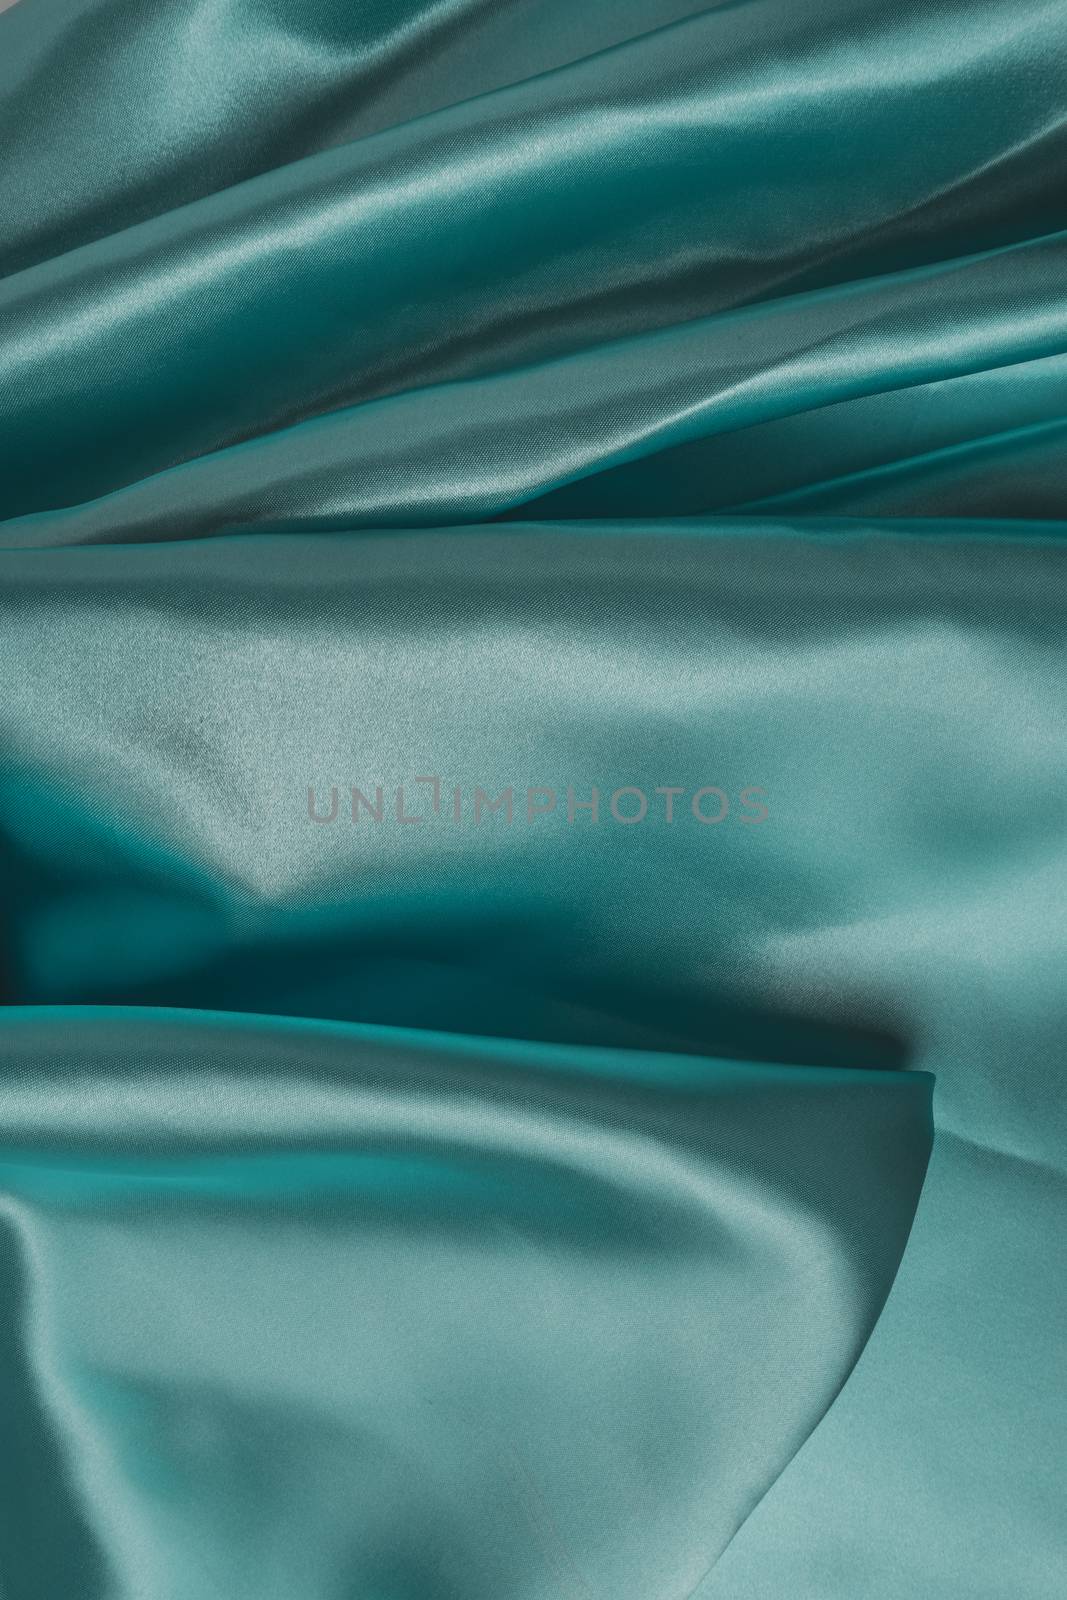 Smooth elegant emerald silk can use as wedding background by AnaMarques